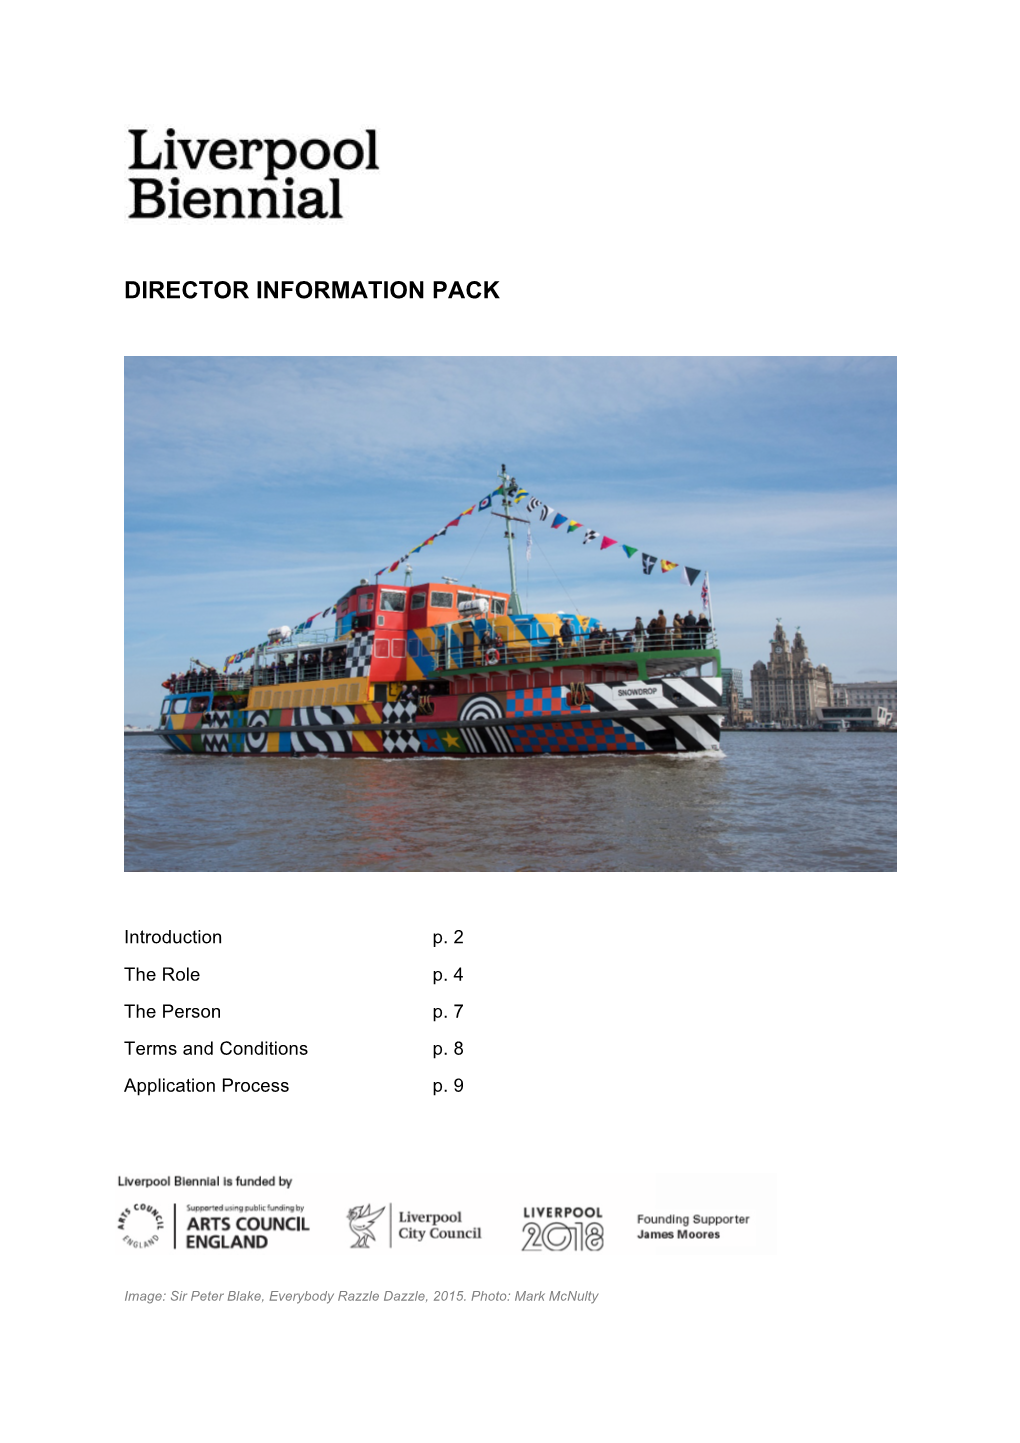 Director Information Pack